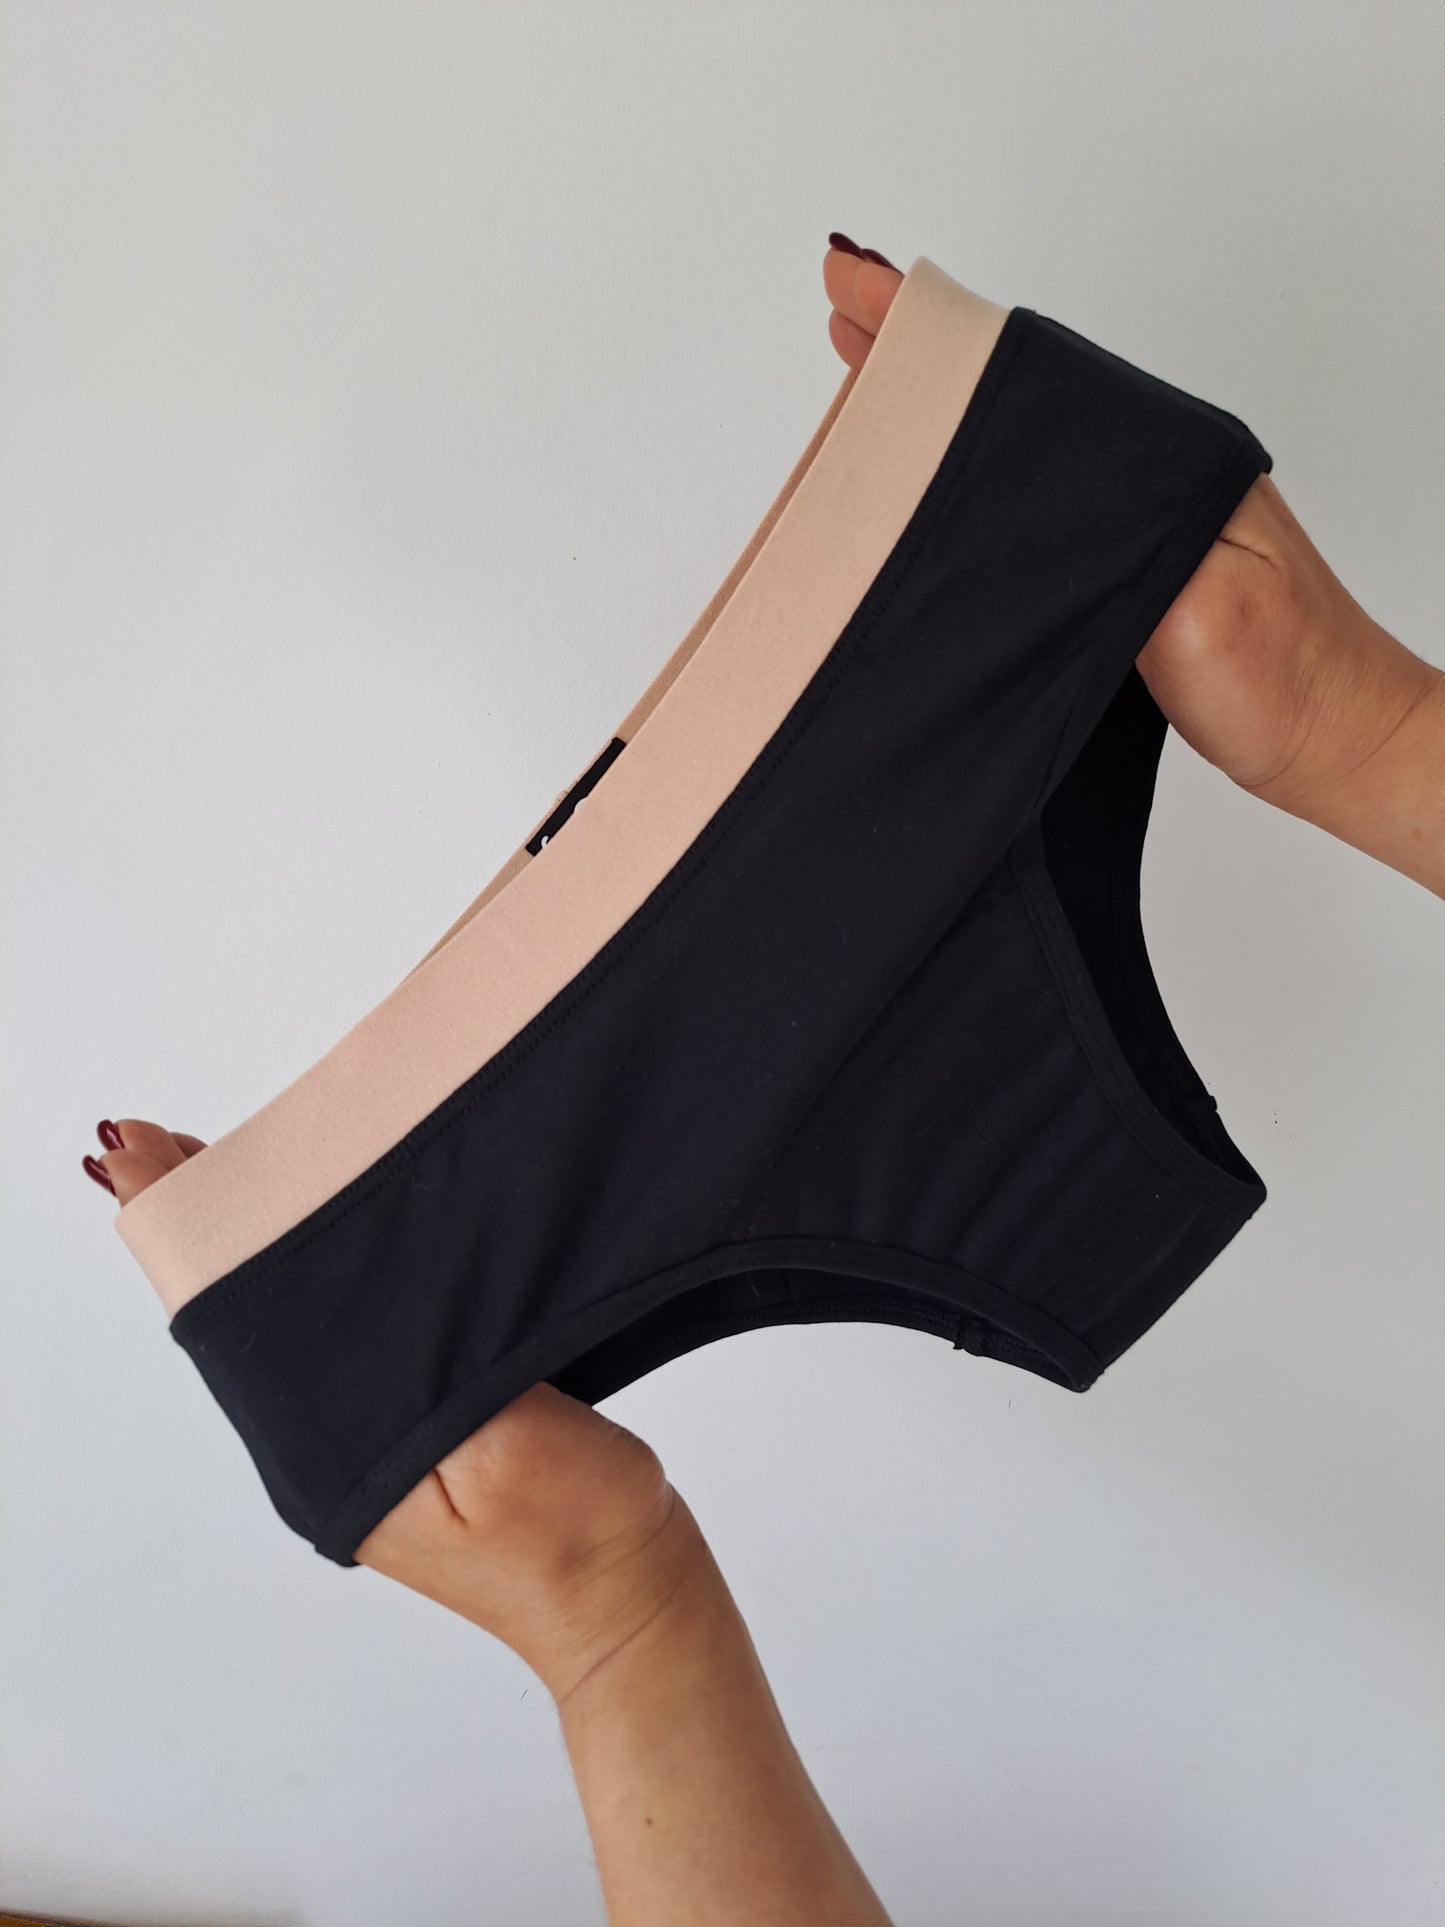 CLASSIC Menstrual Underwear - Special Edition